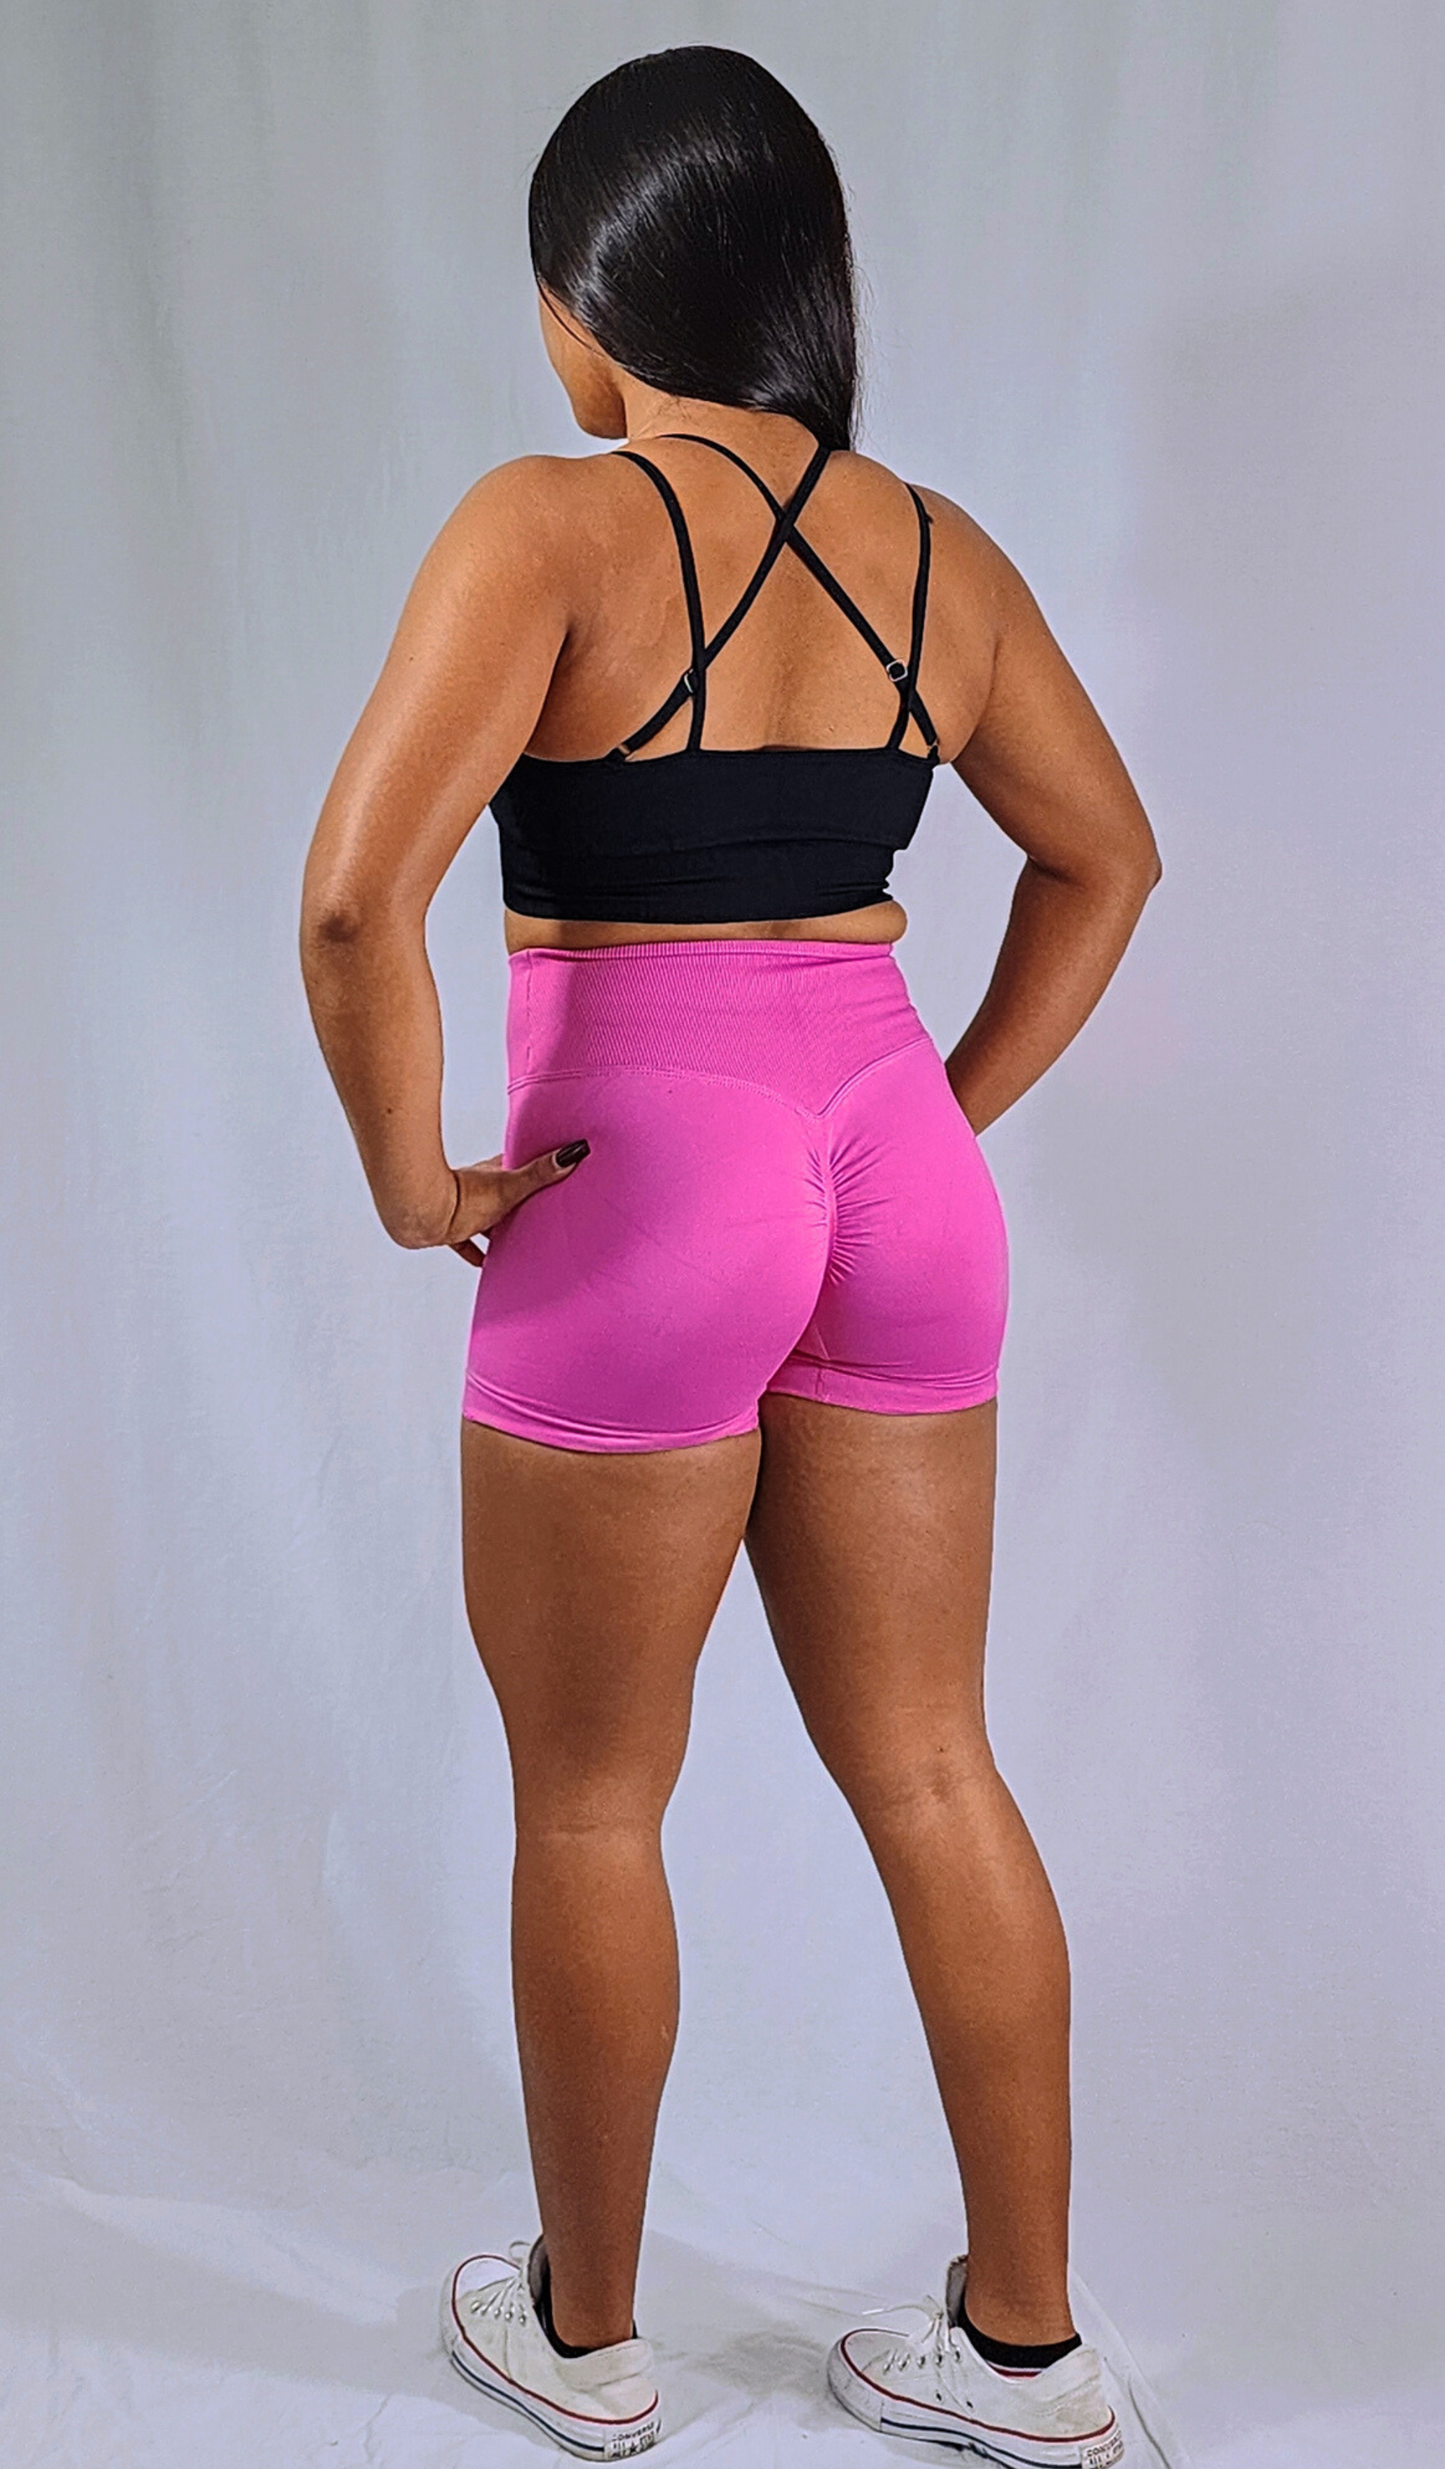 Gym Brand Apparel pink shorts and black strap back sports bra back view.